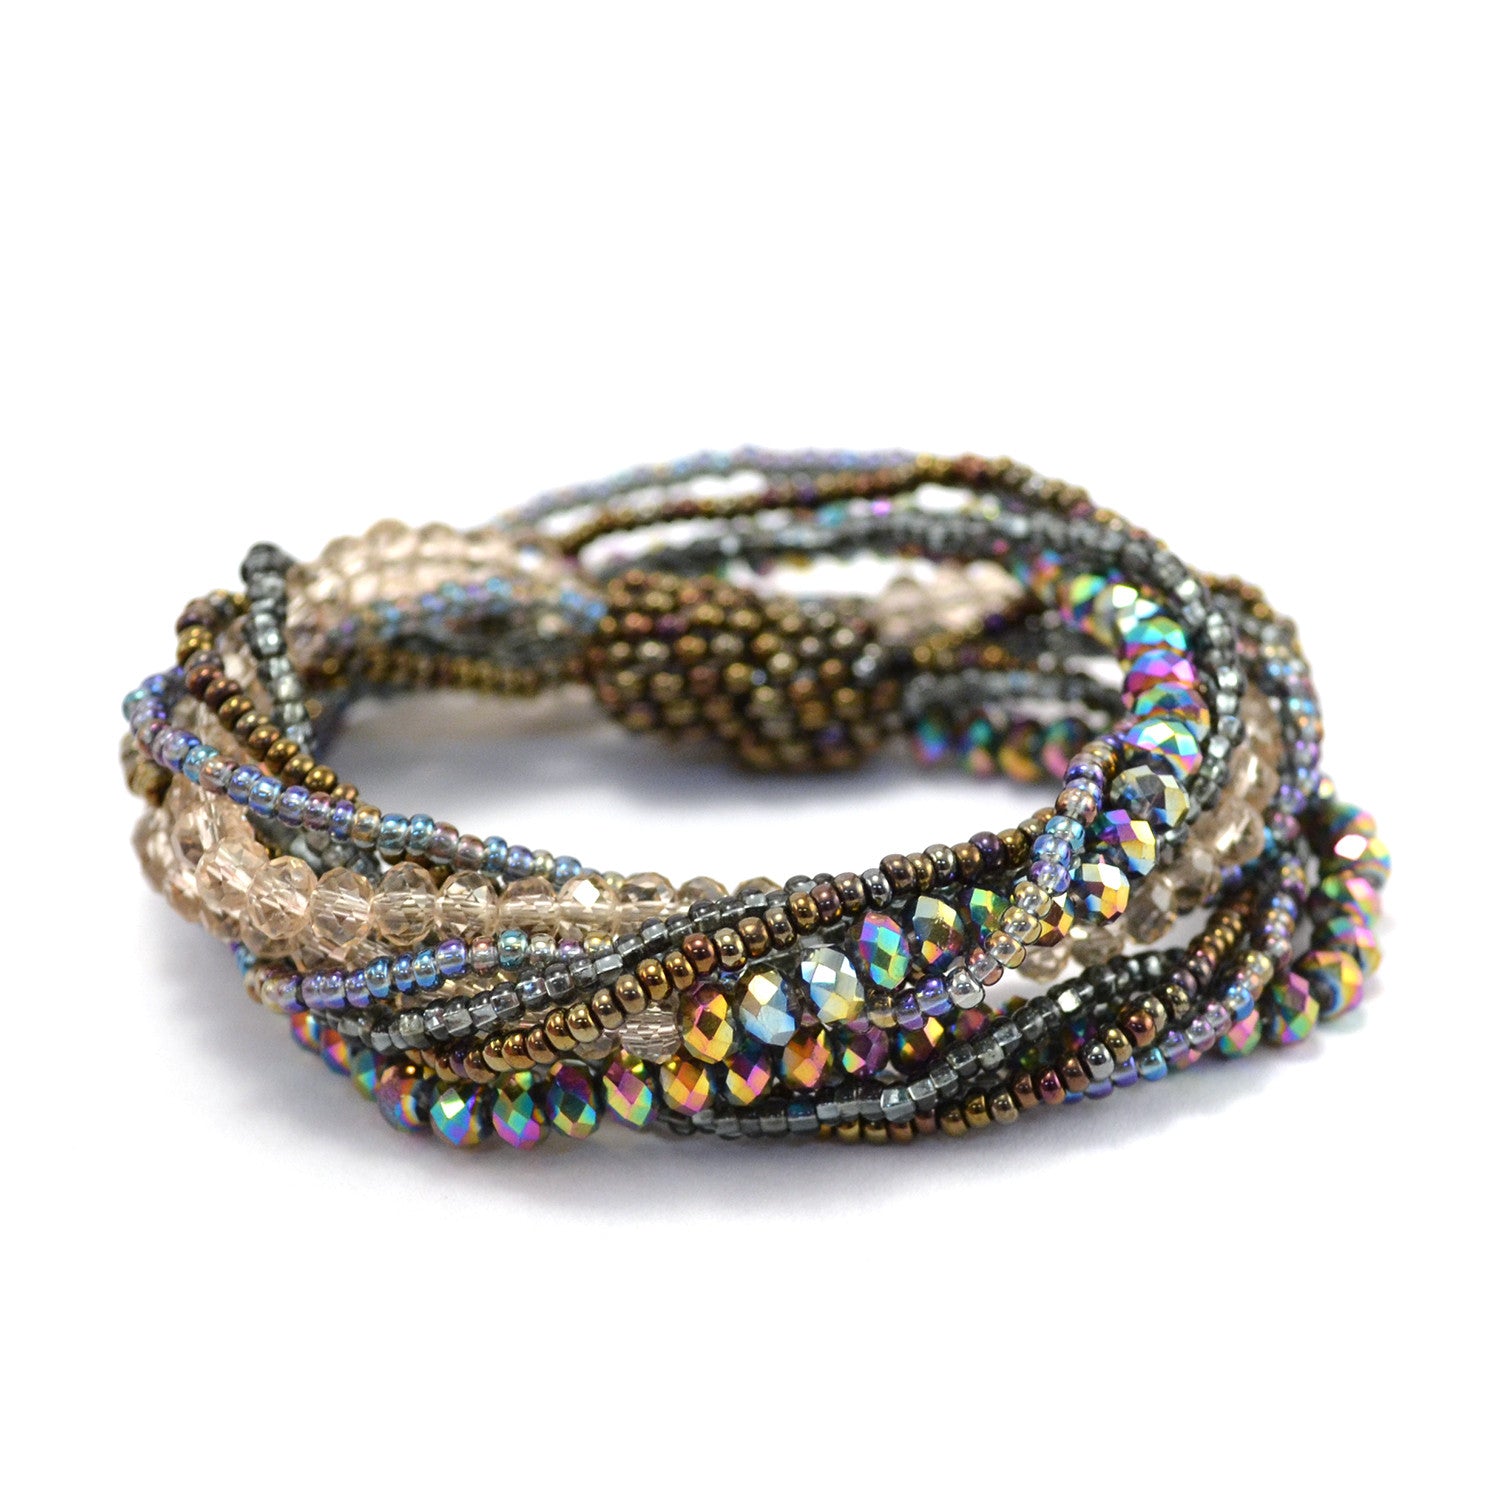 Fair Trade Handmade Guatemalan Beaded Crystal Wrap Necklace & Bracelet